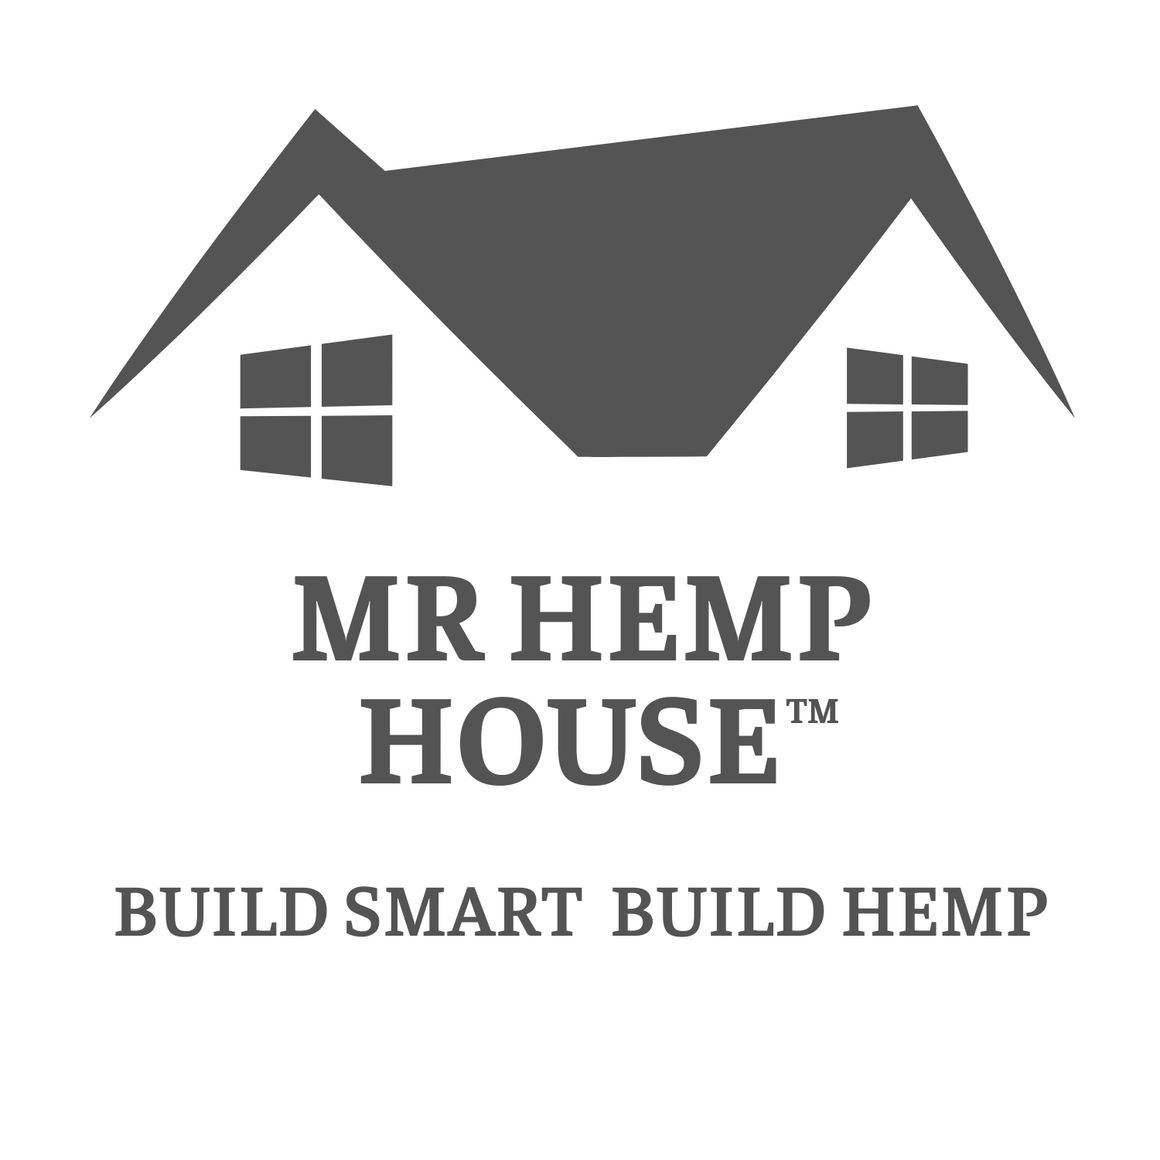 Mr Hemp House, llc company logo